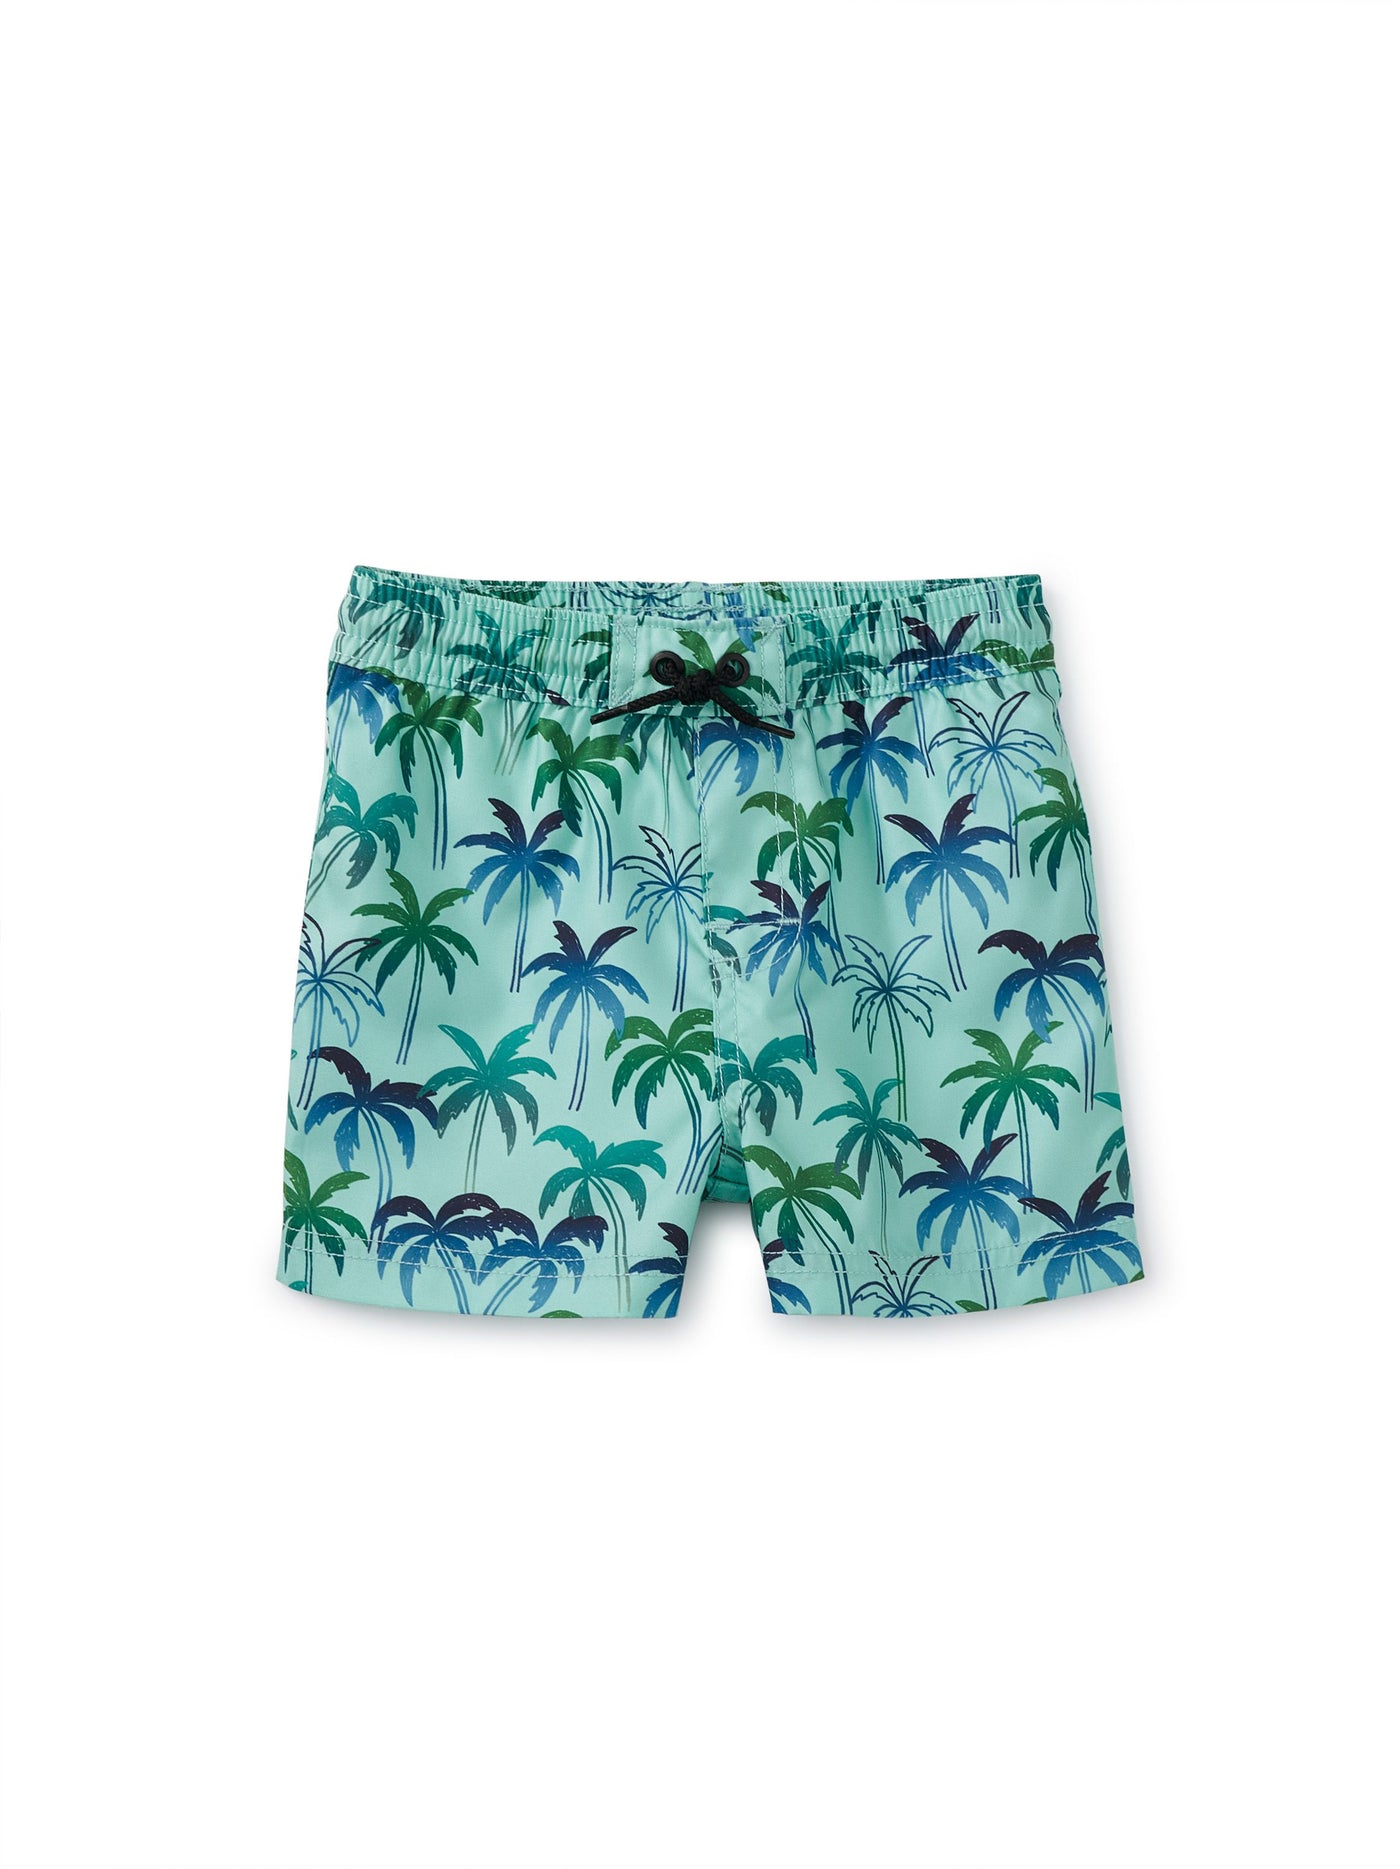 Shortie Baby Swim Trunks/Verdant Palms Blue